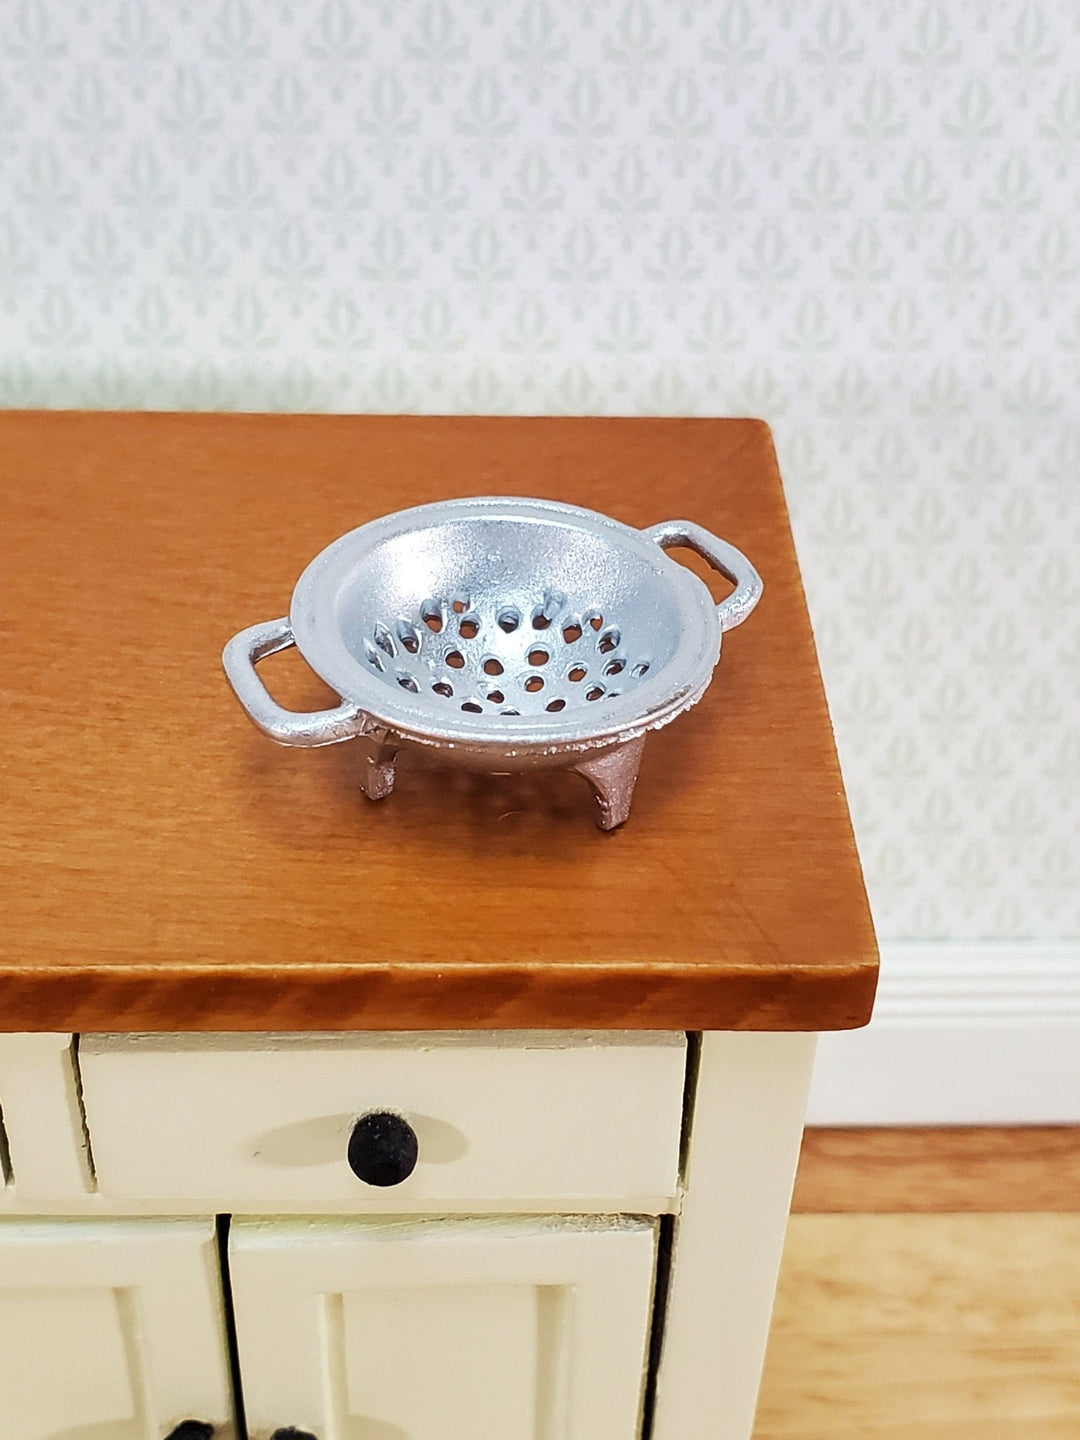 Dollhouse Miniature Colander Strainer Metal 1:12 Scale Kitchen Accessories - Miniature Crush